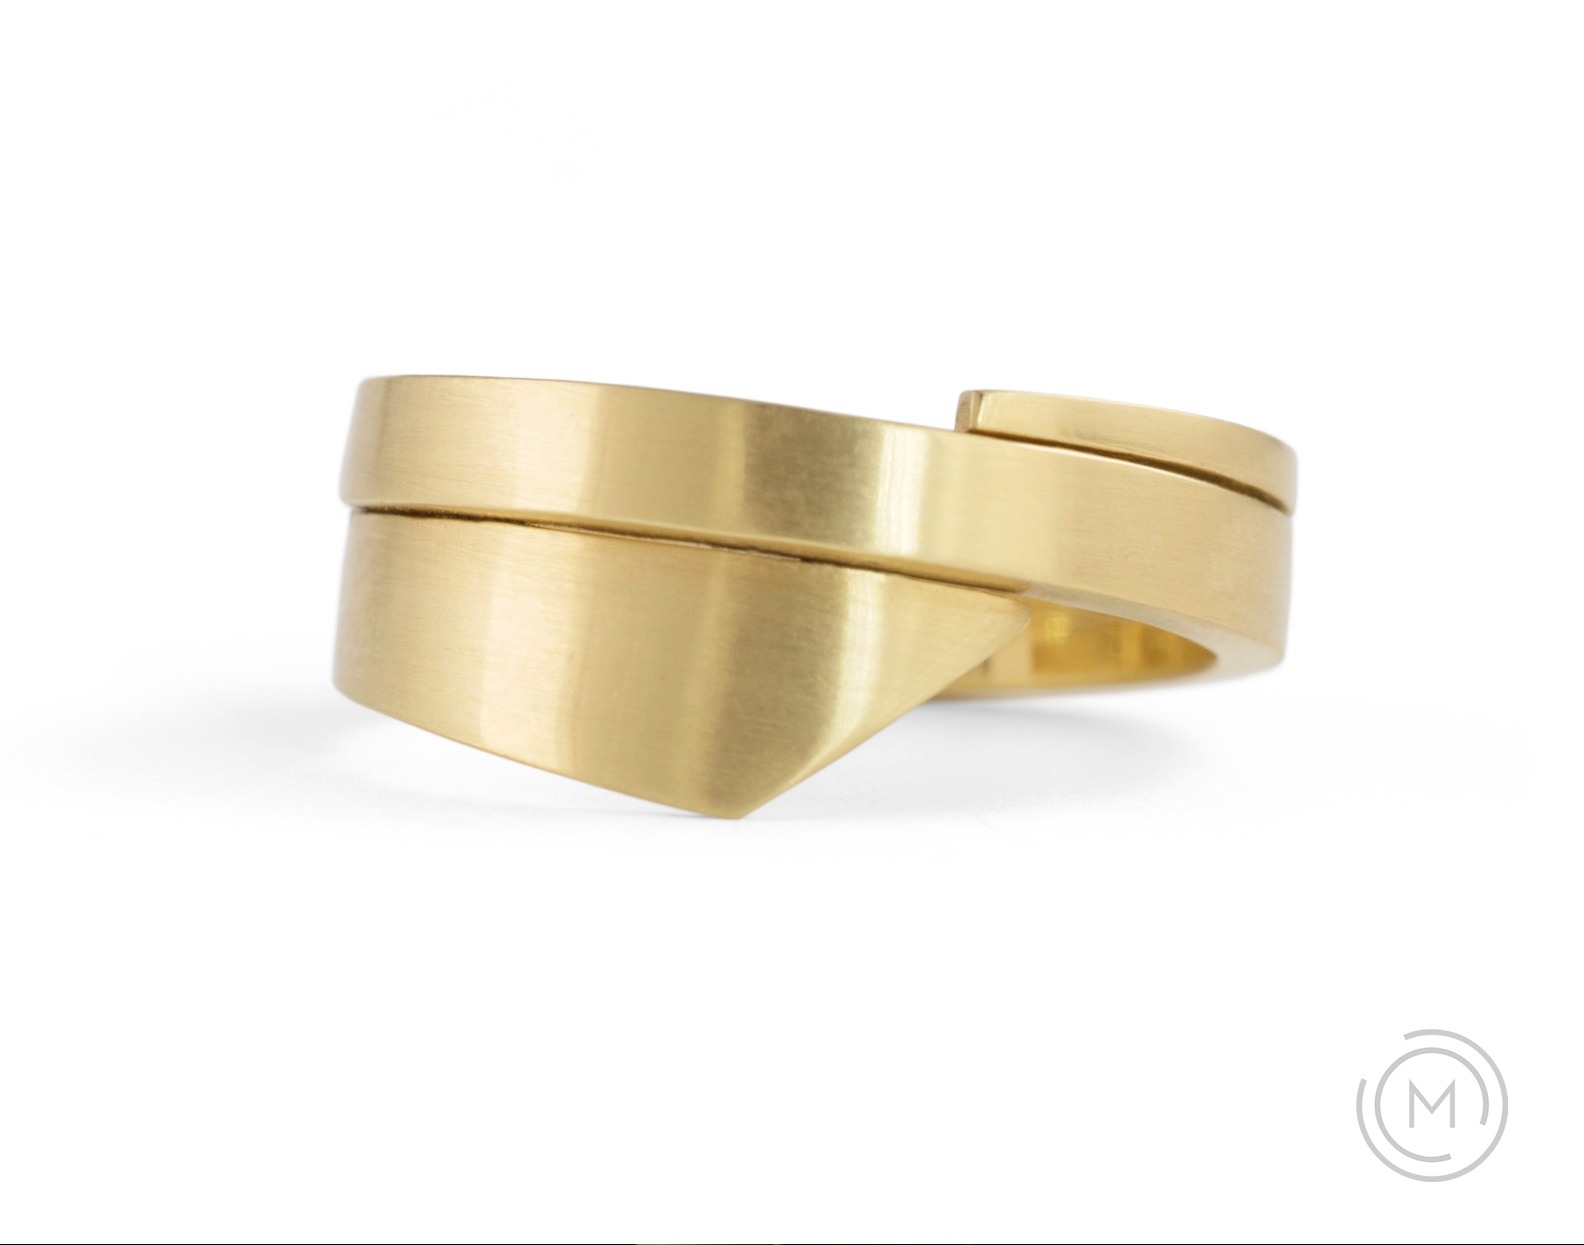 Alternative forged gold wedding ring